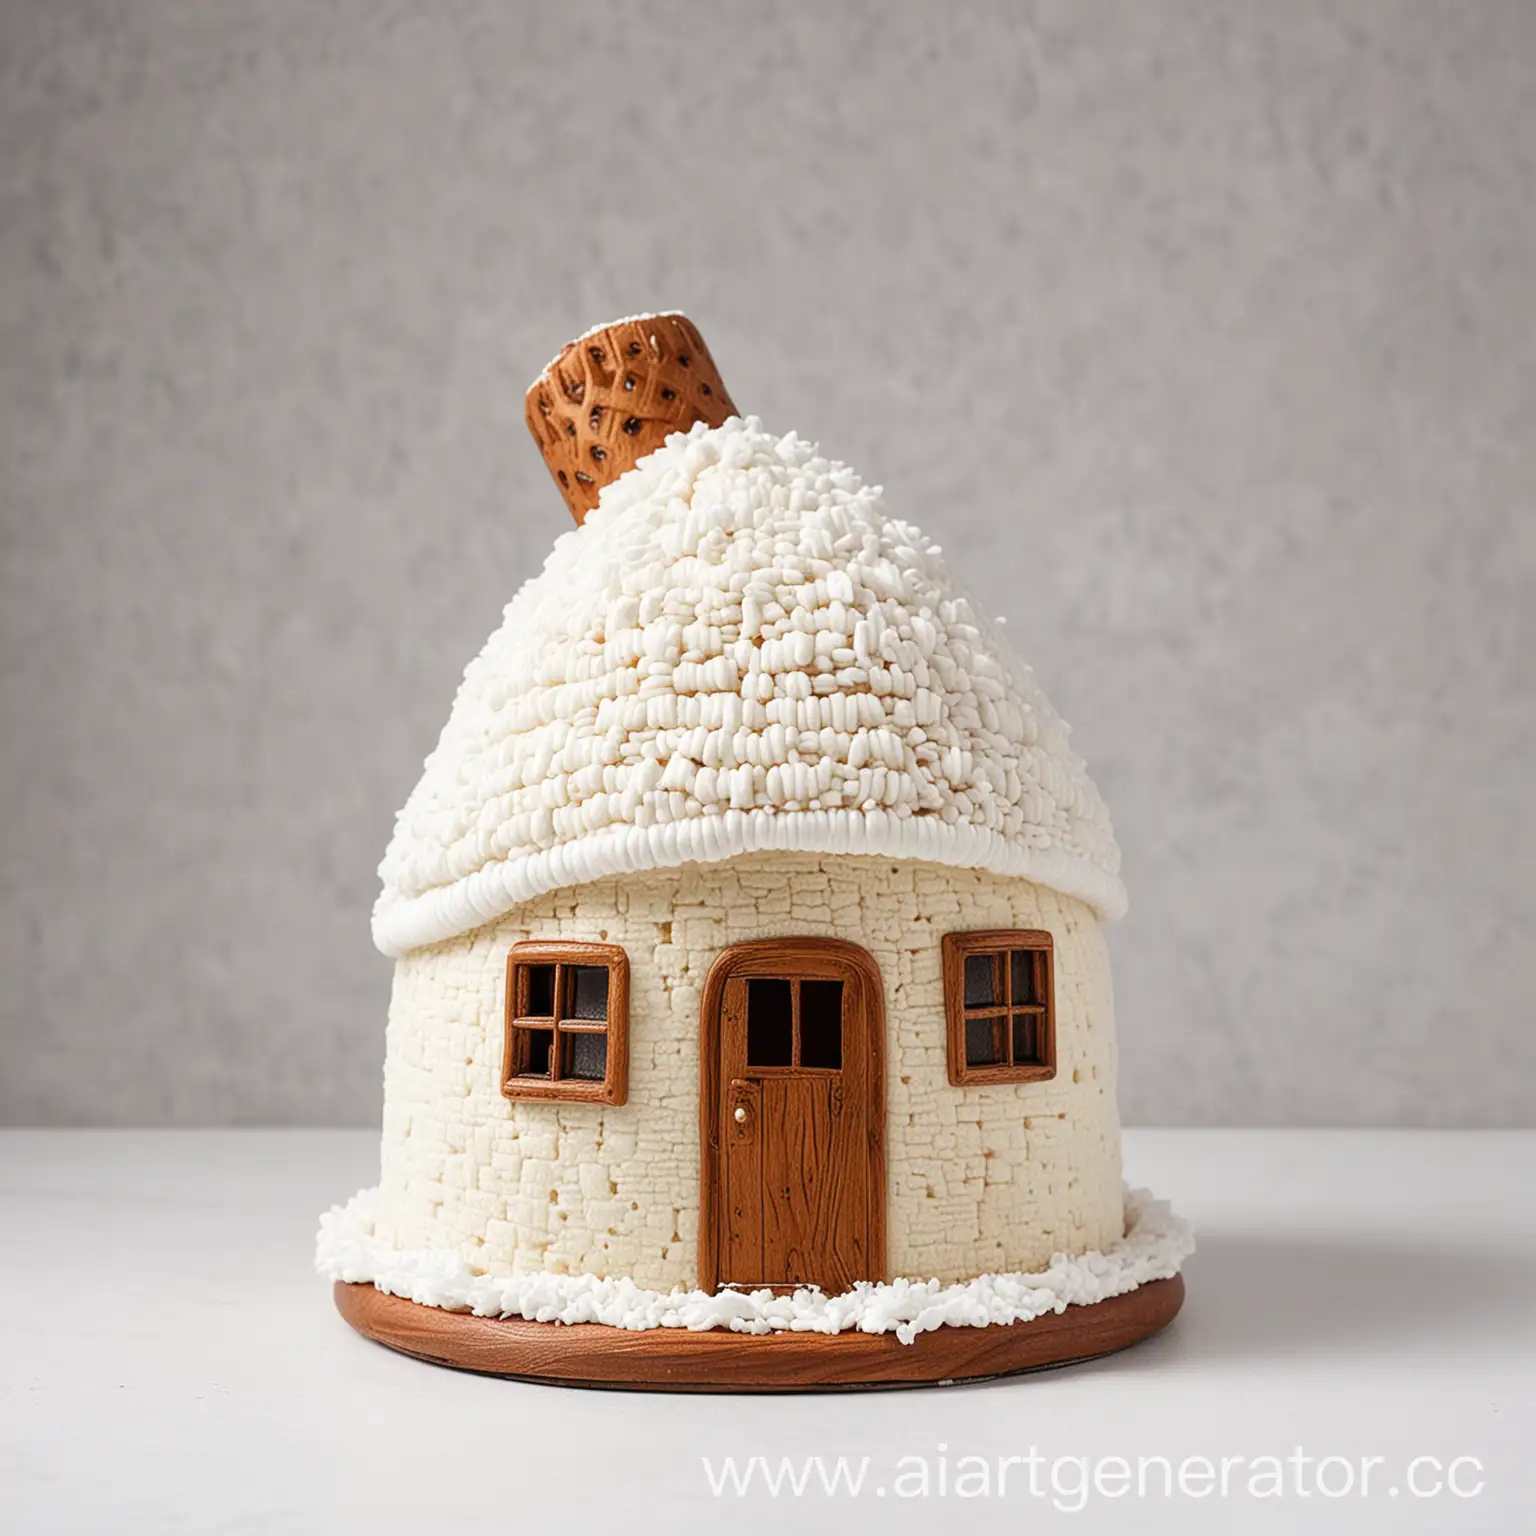 Traditional-Kulich-Cake-Shaped-like-a-House-on-White-Background